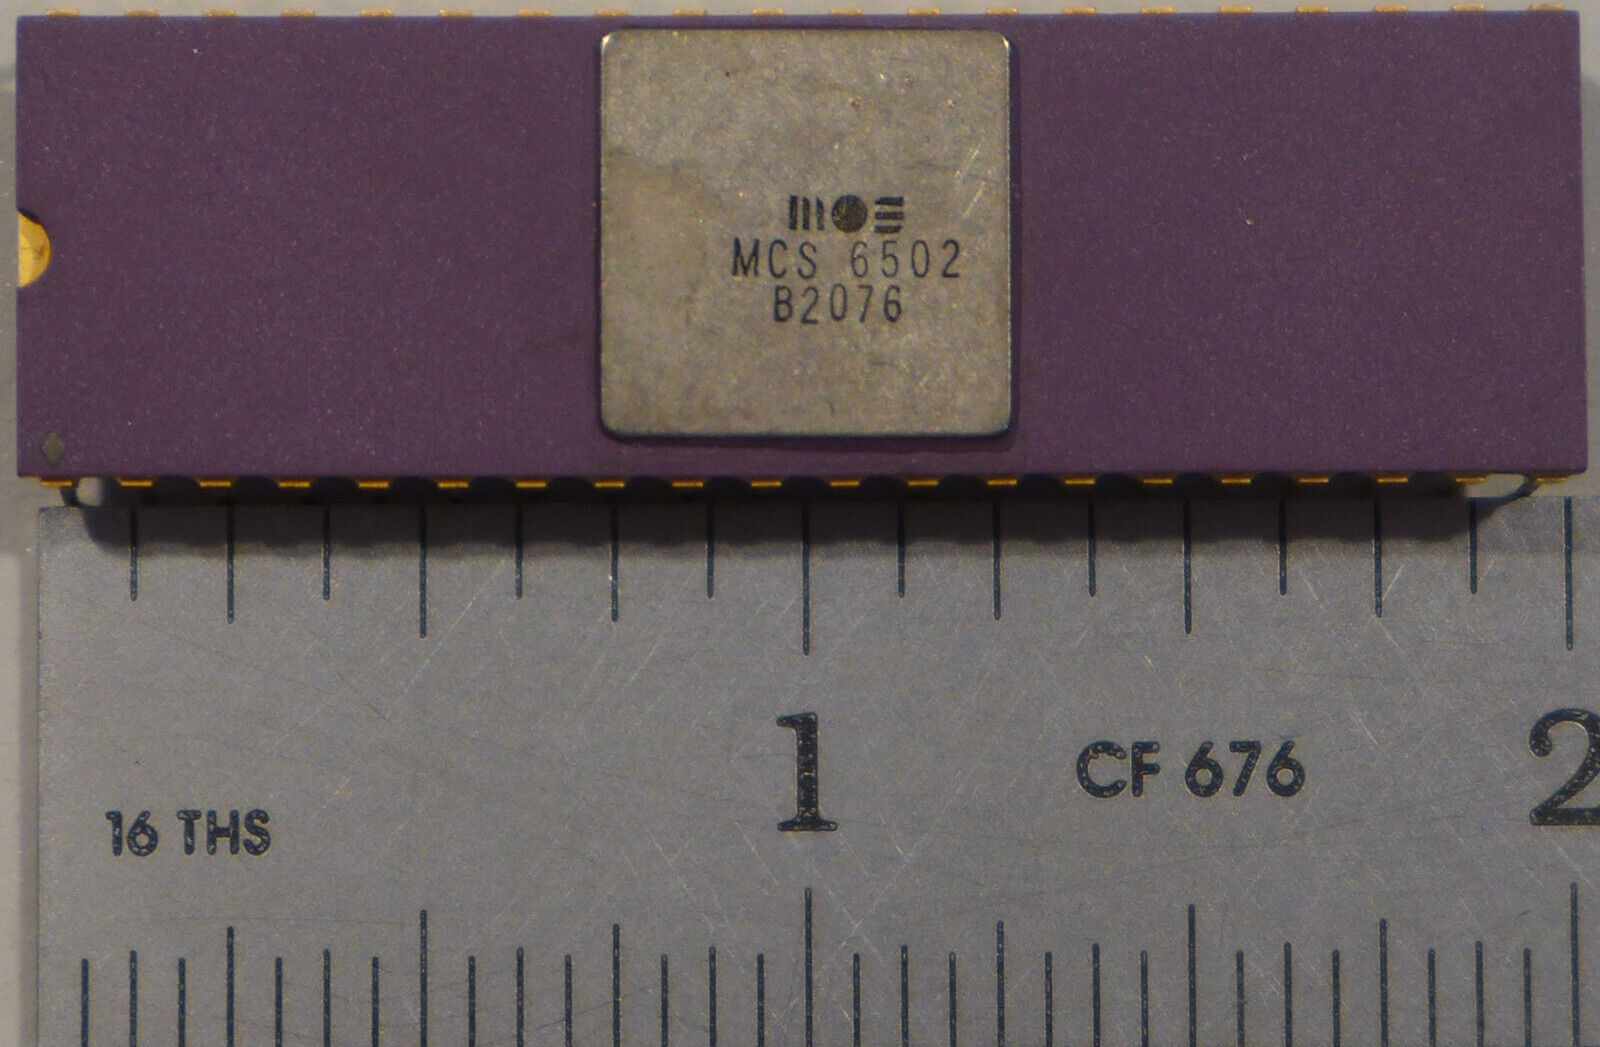 MOS MCS 6502 Vintage Microprocessor Date-Tested & Working B2076 Apple 1 Era